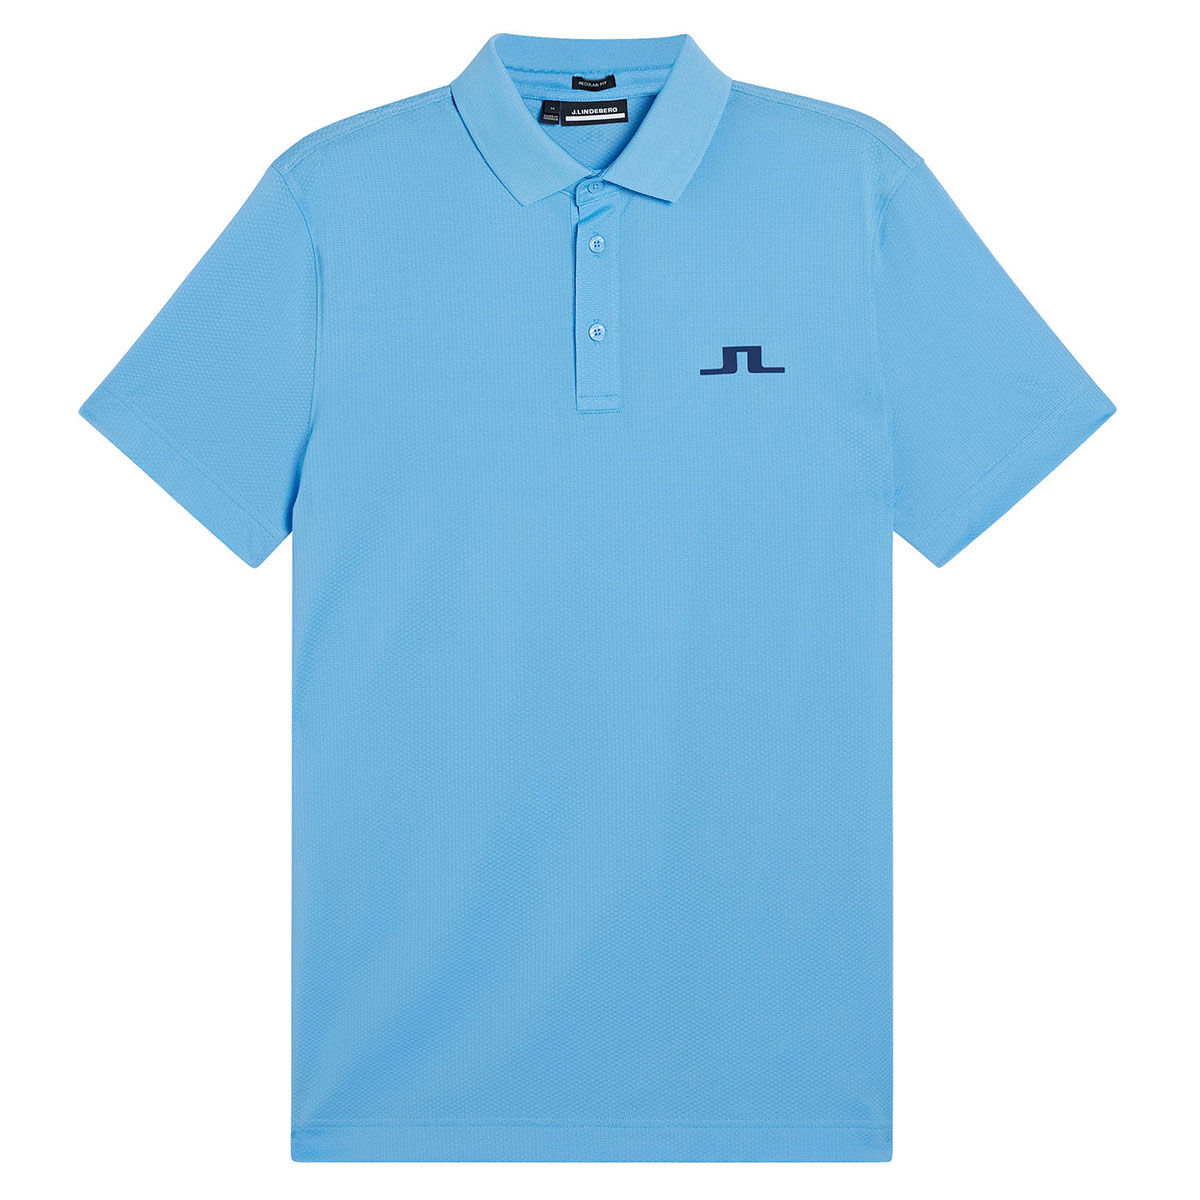 J.Lindeberg Men’s Bridge Golf Polo Shirt, Mens, Little boy blue diamond, Xxl | American Golf